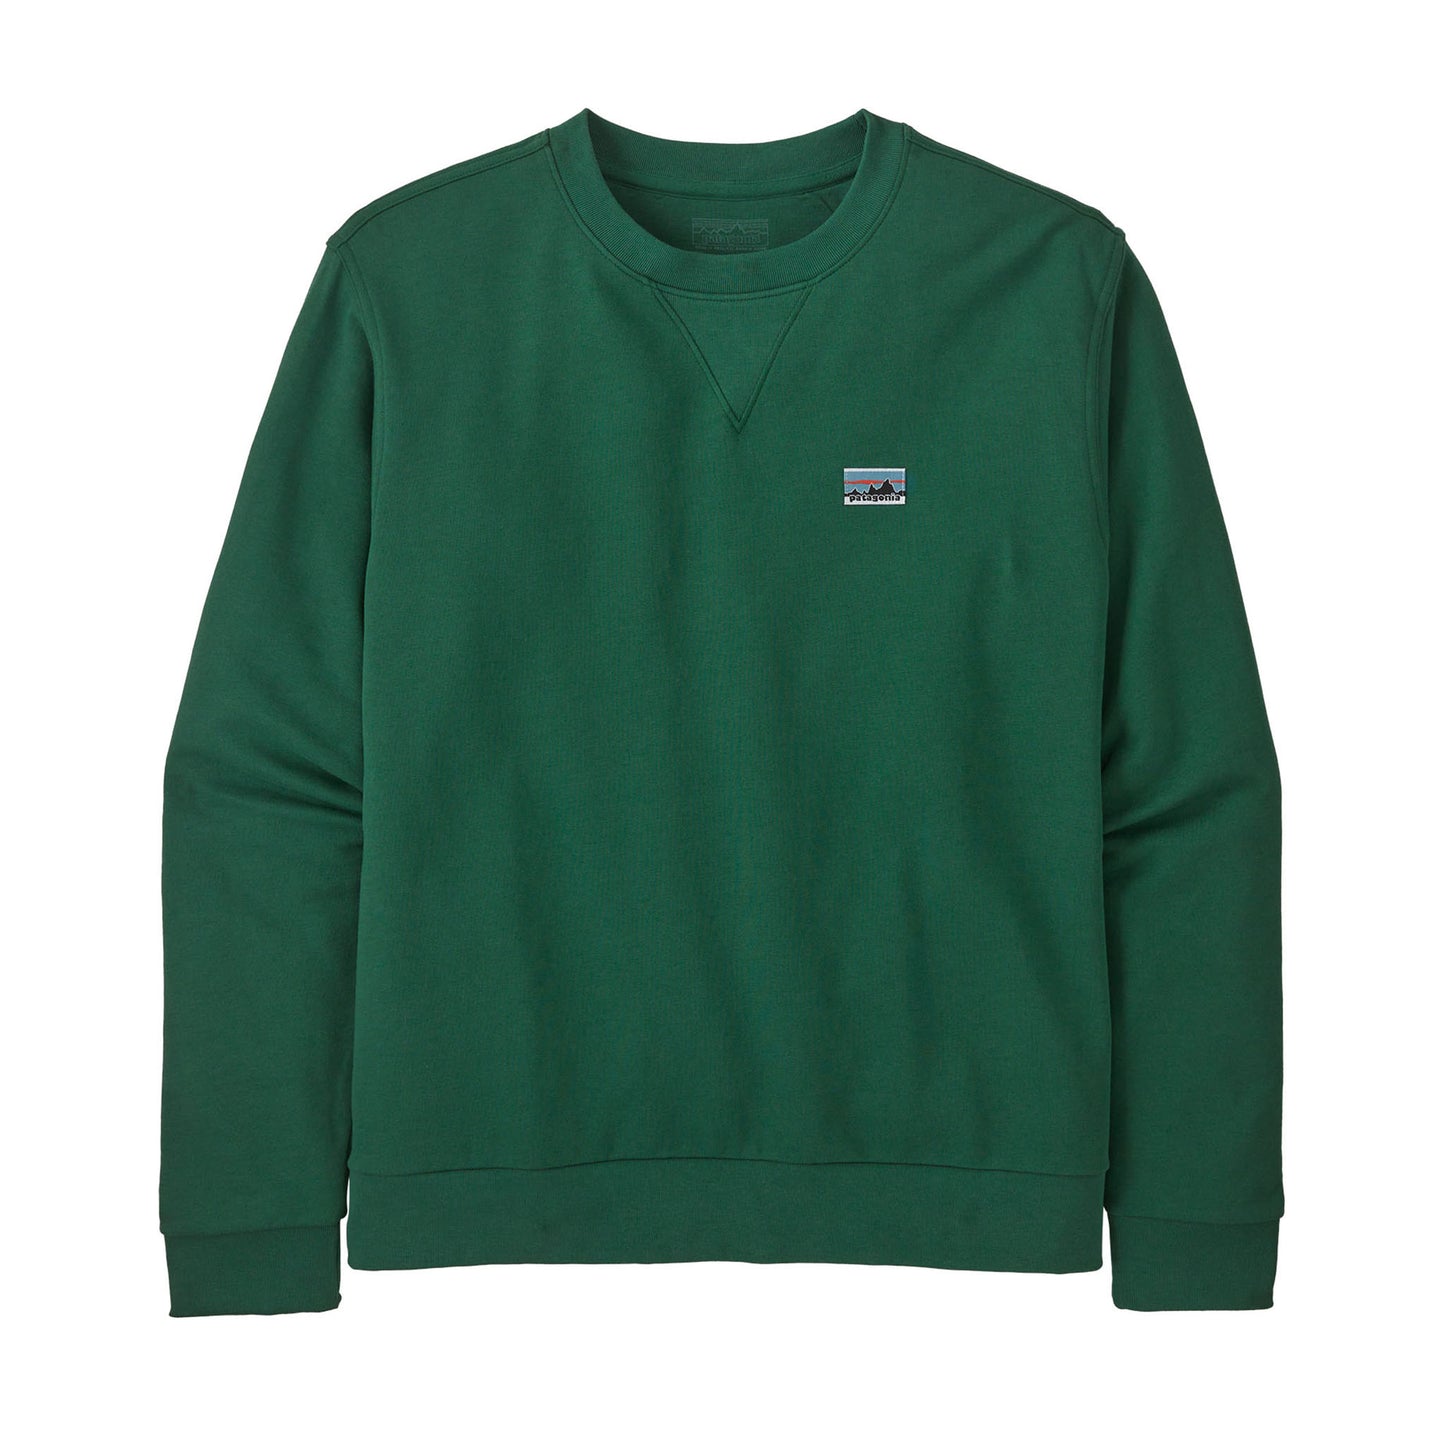 Patagonia Daily Crewneck Sweatshirt in green